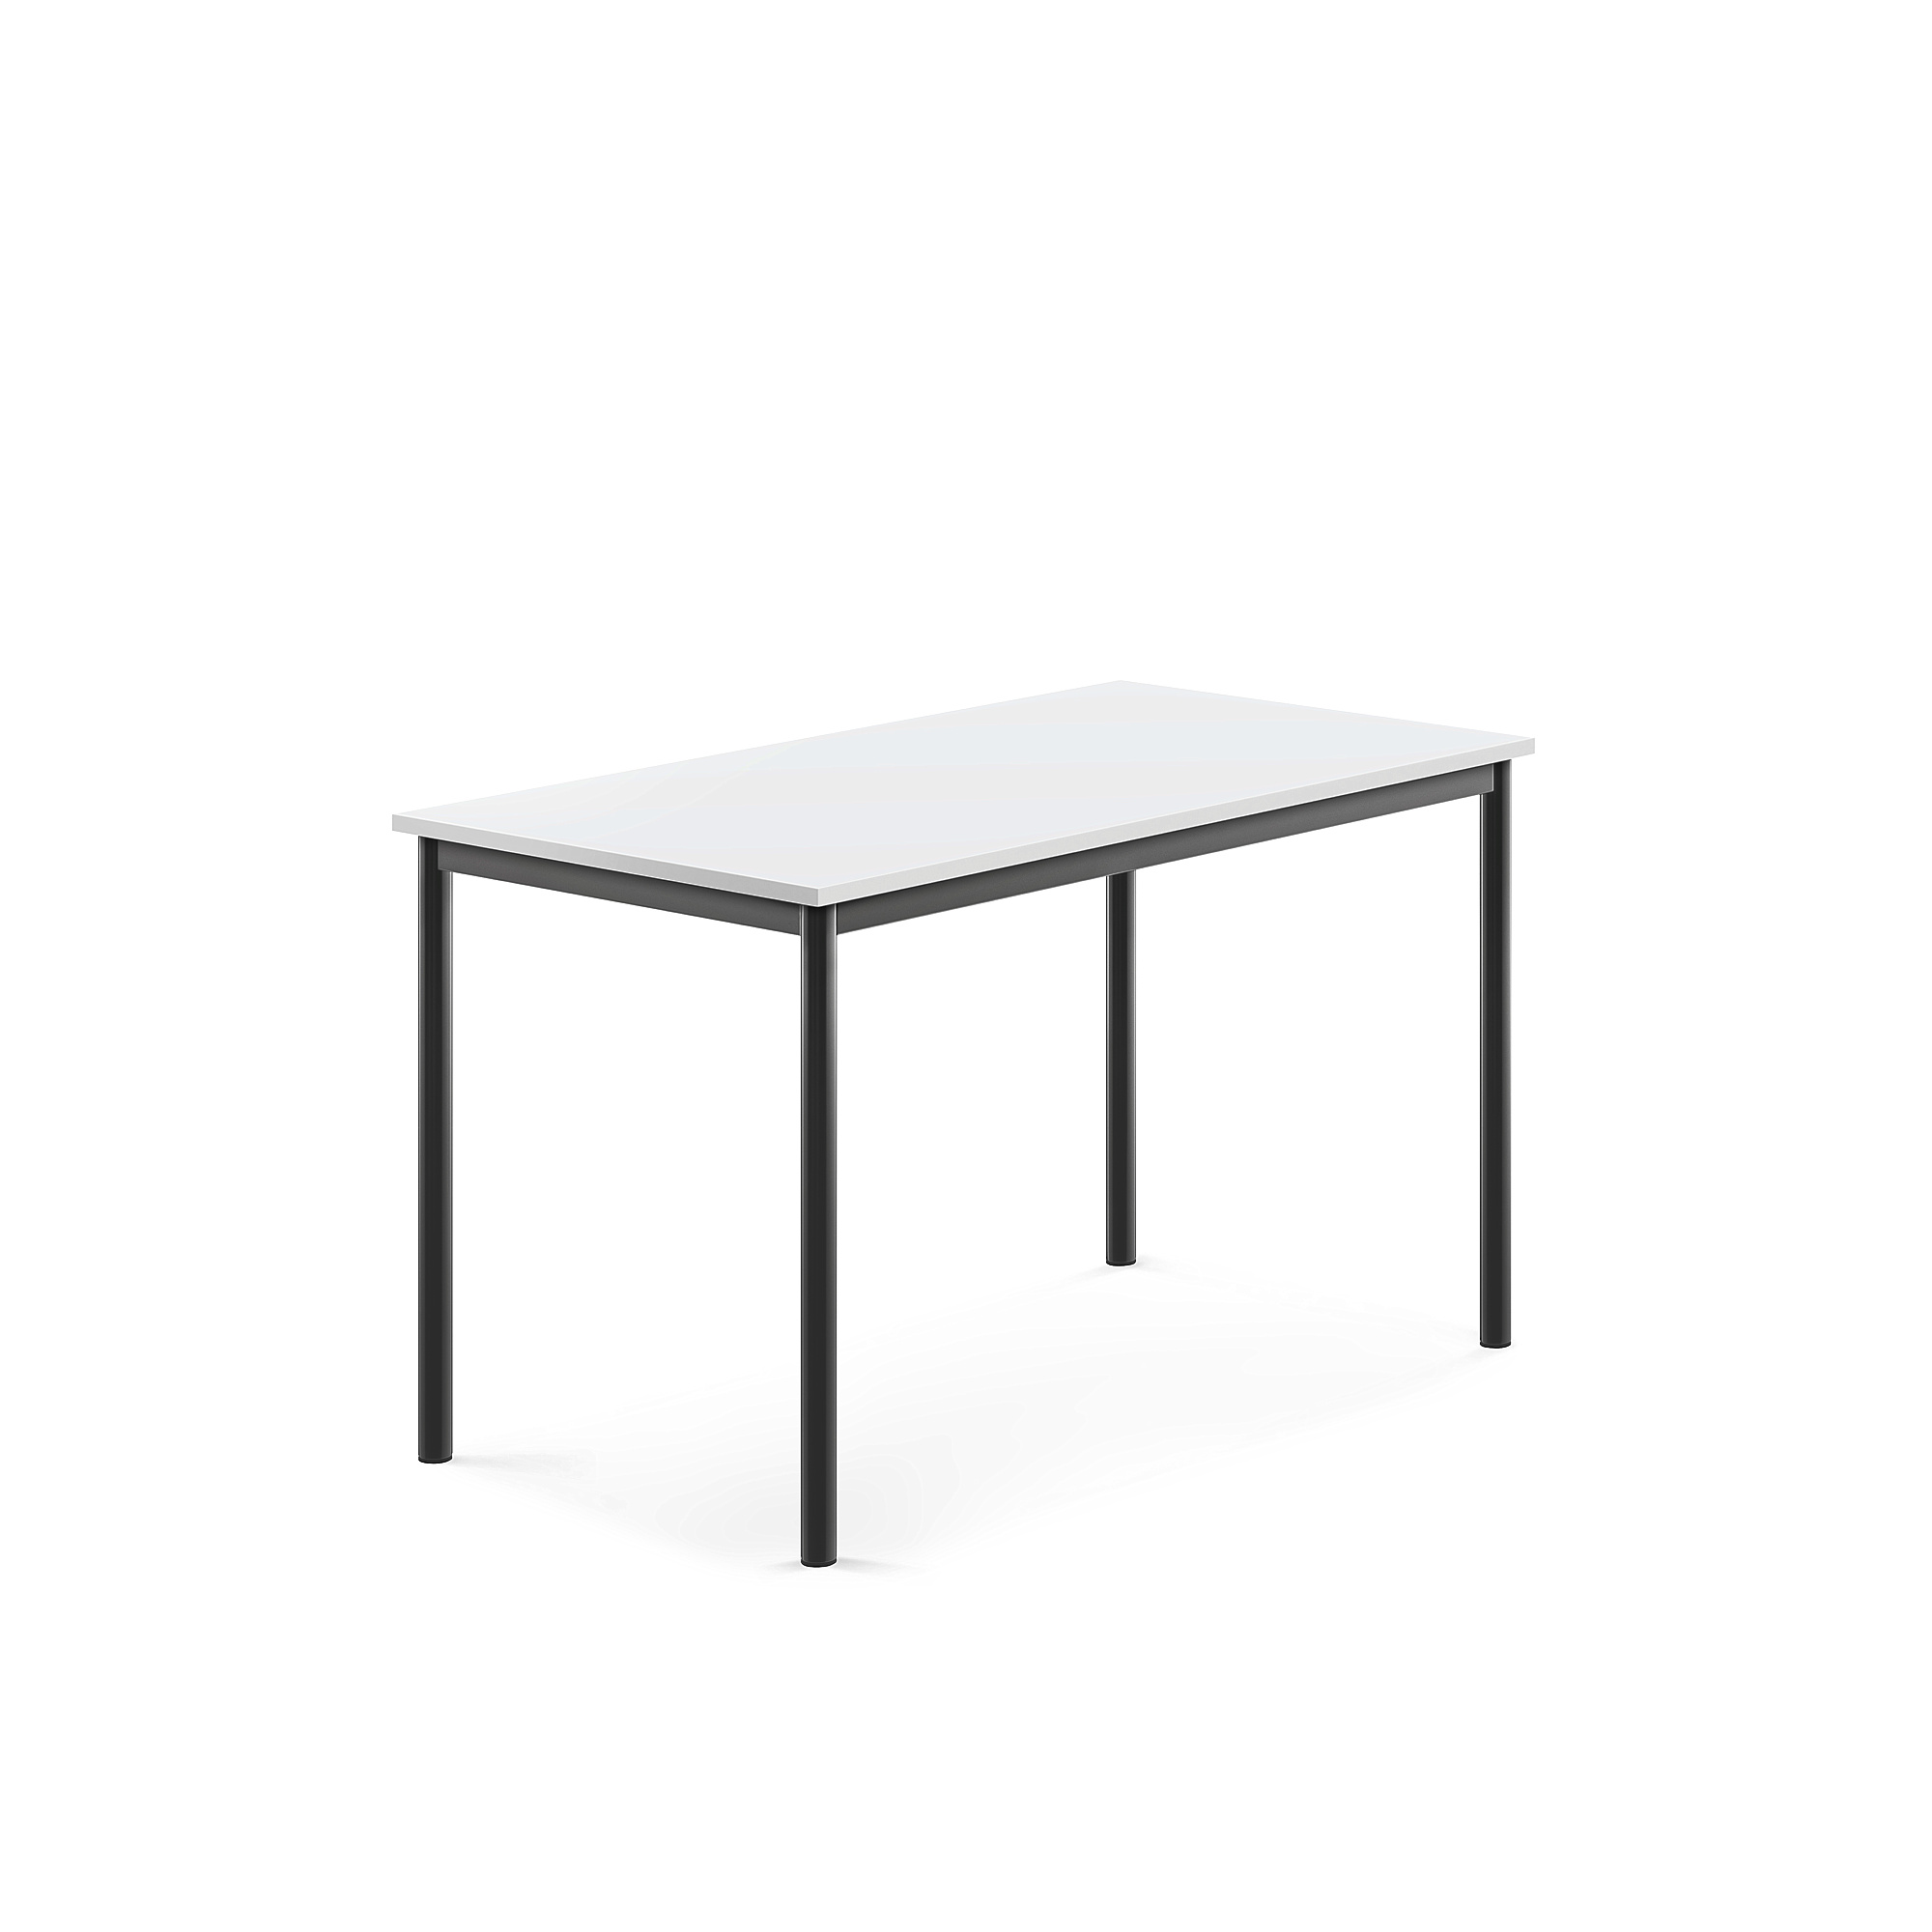 Stůl BORÅS, 1200x700x720 mm, antracitově šedé nohy, HPL deska, bílá